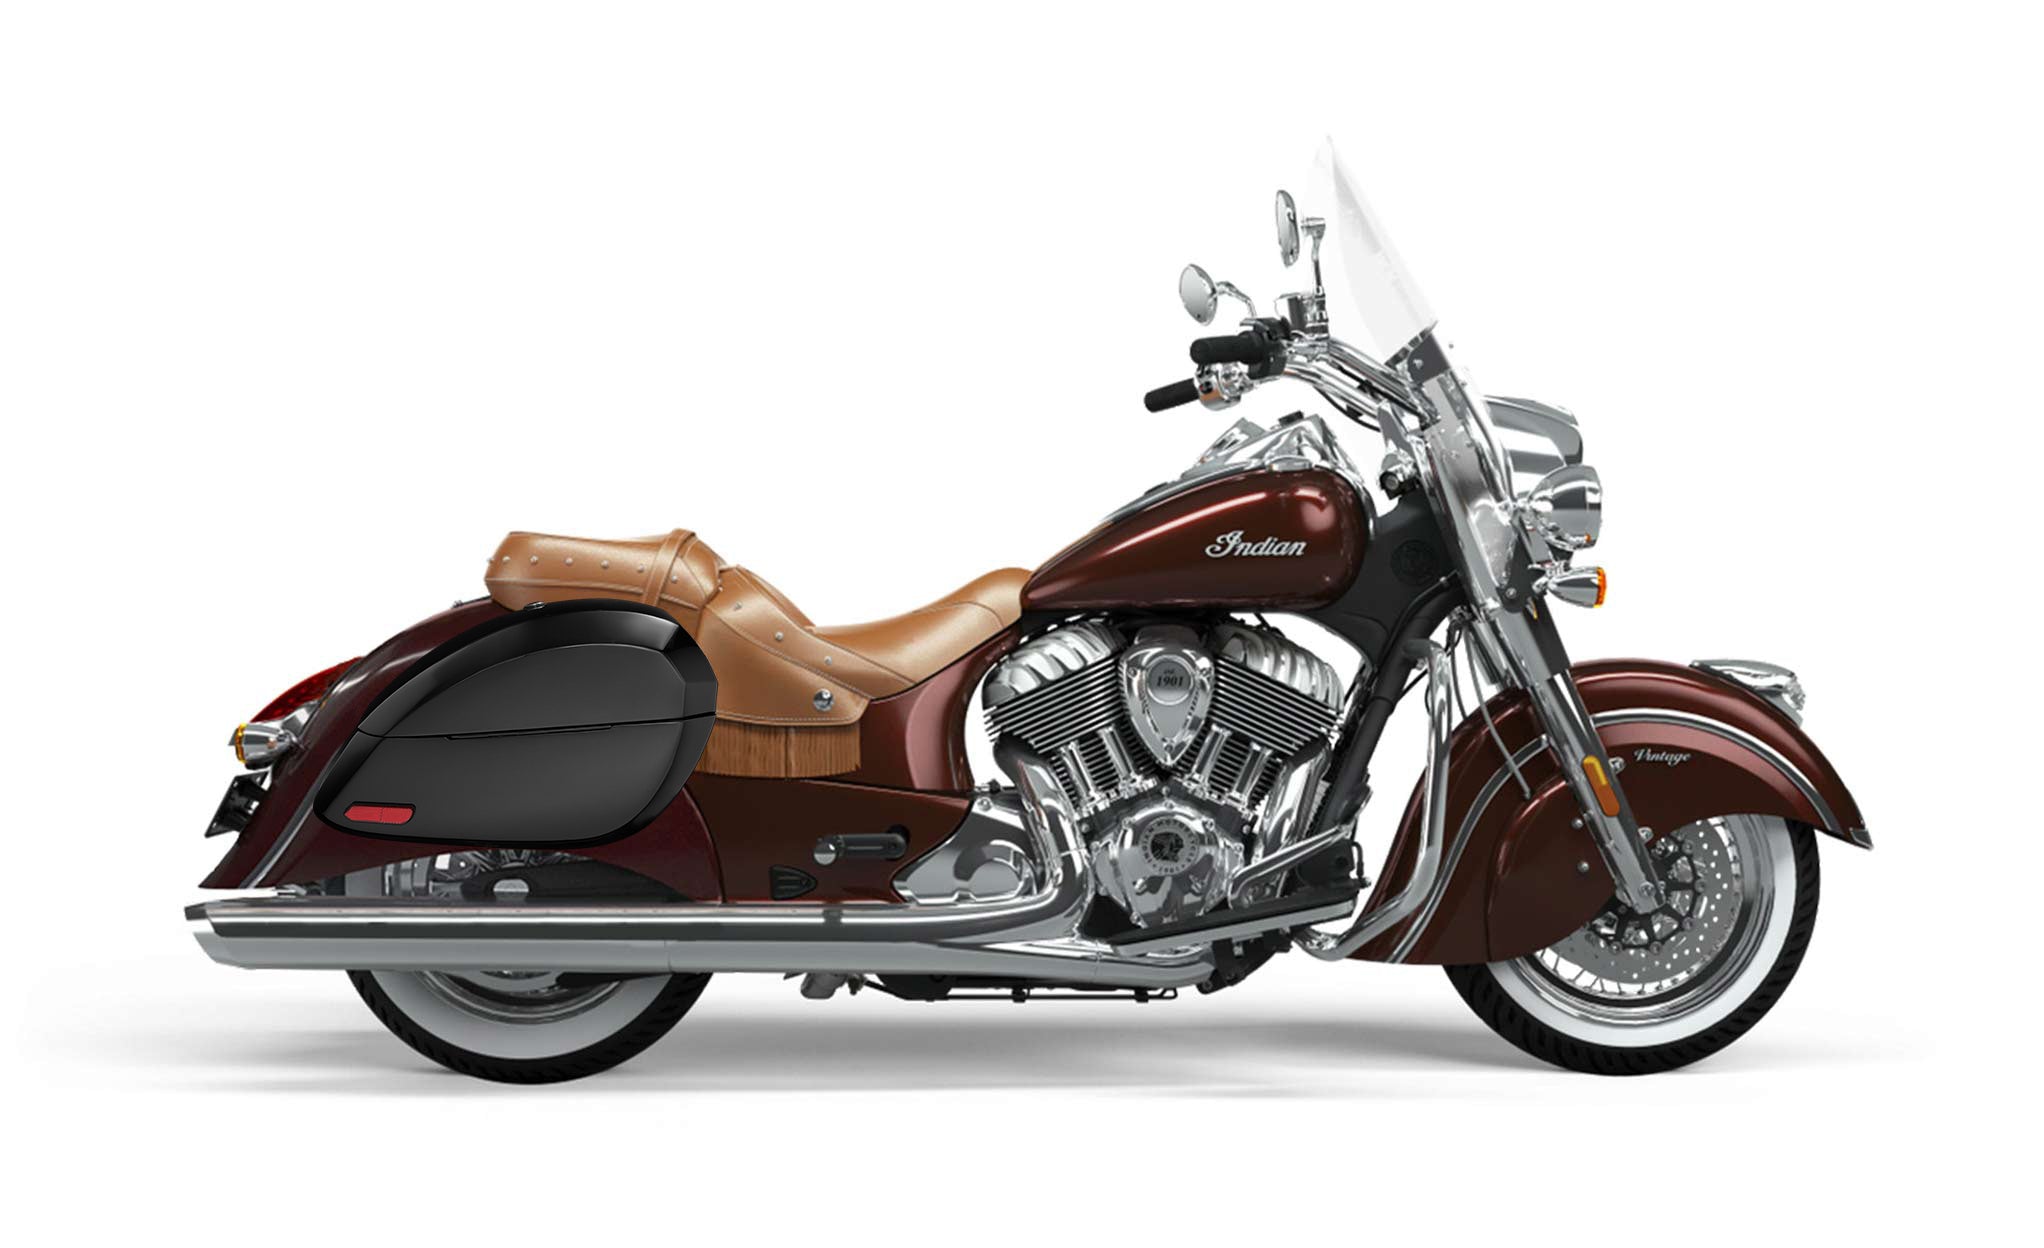 Viking Phantom Large Indian Vintage Painted Motorcycle Hard Saddlebags Engineering Excellence with Bag on Bike @expand